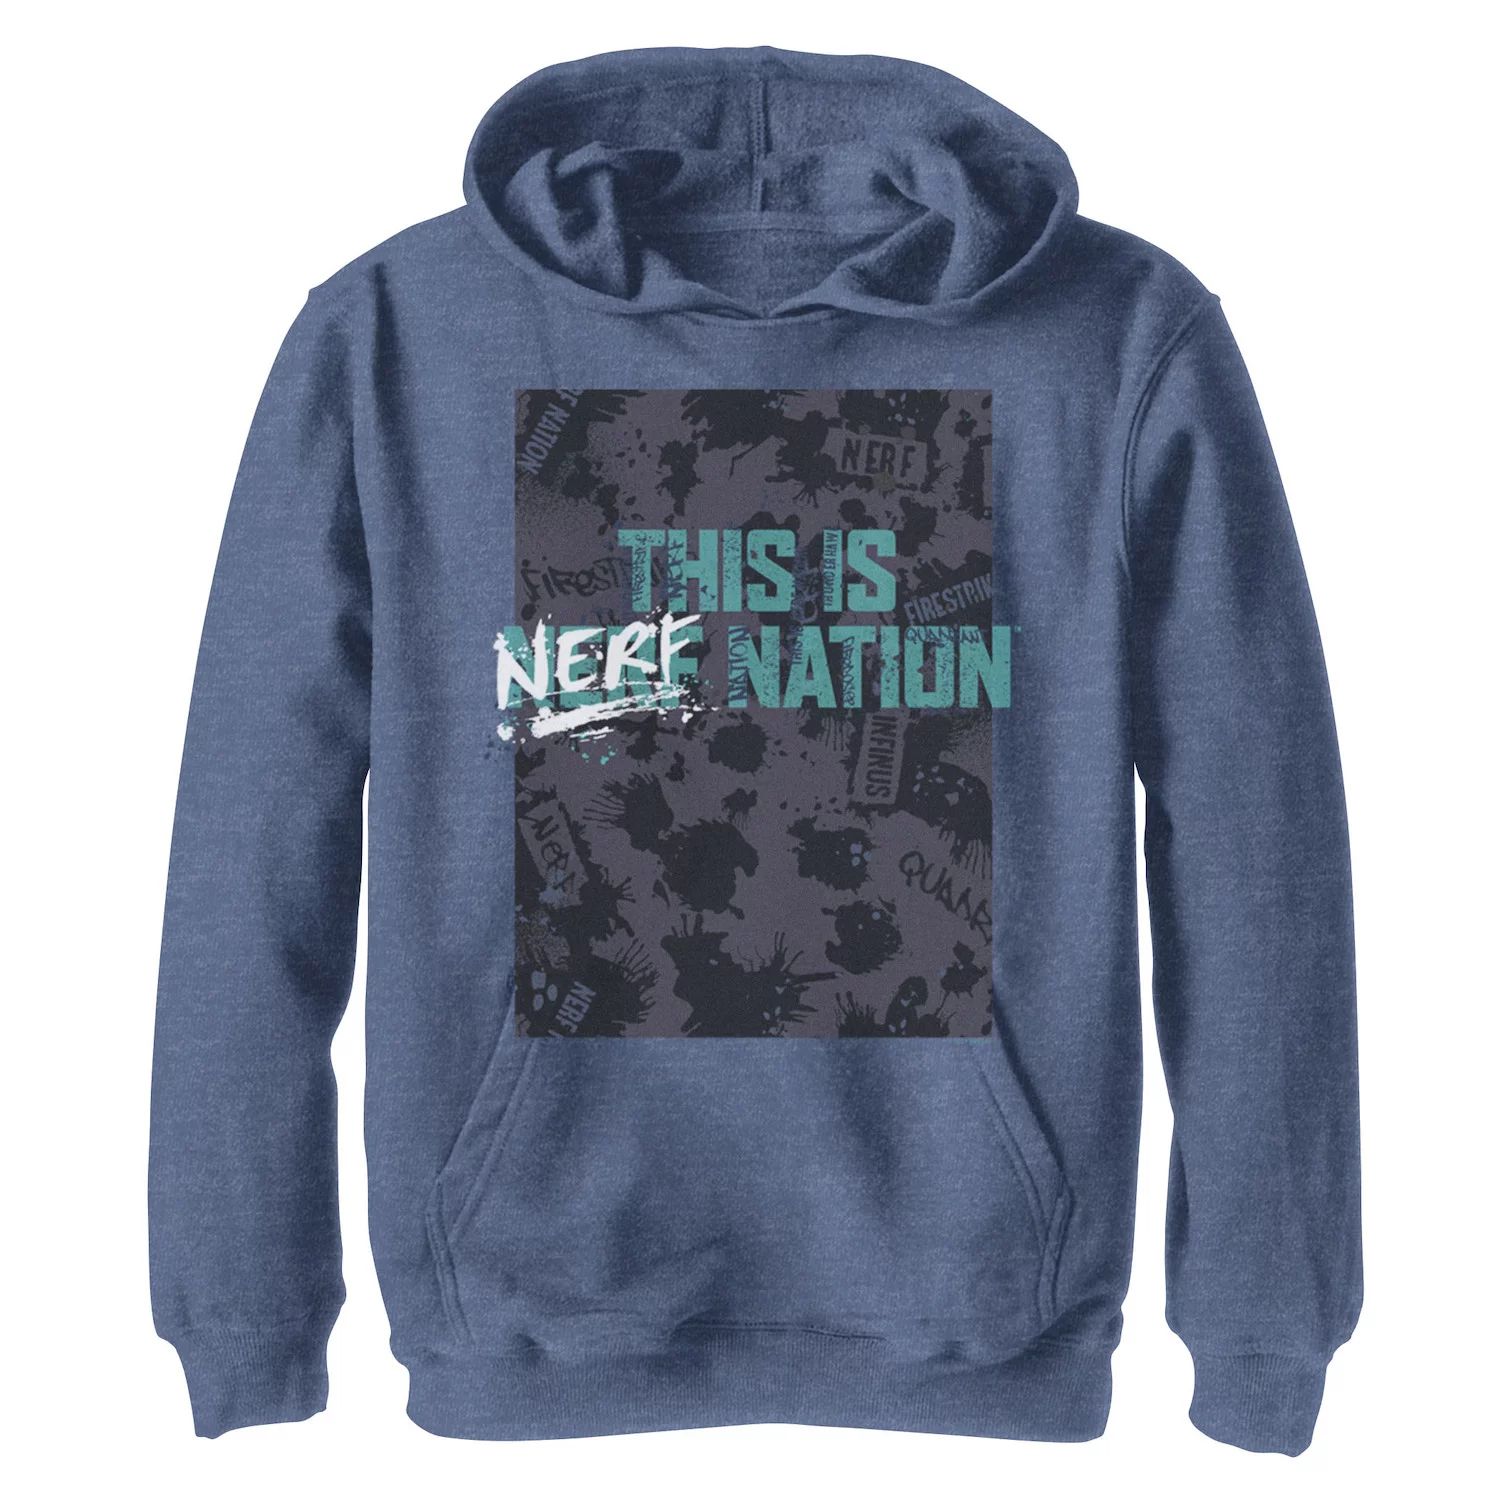 Толстовка с плакатом Nerf This Is Nerf Nation для мальчиков 8–20 лет Nerf толстовка с плакатом nerf this is nerf nation для мальчиков 8–20 лет nerf